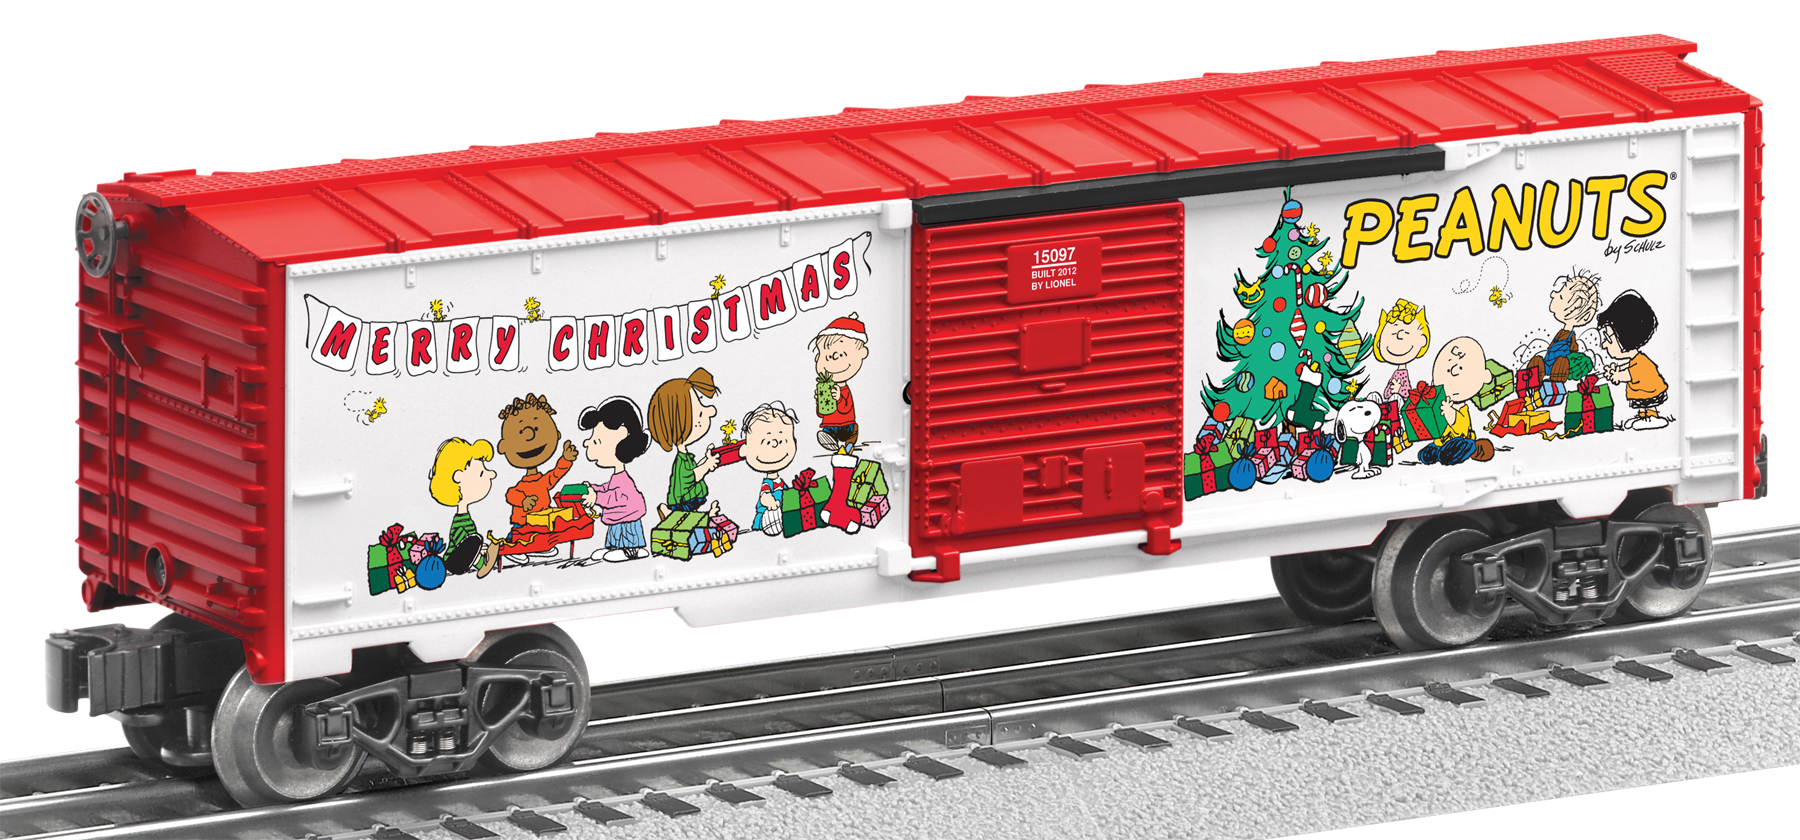 Peanuts Christmas Boxcar image